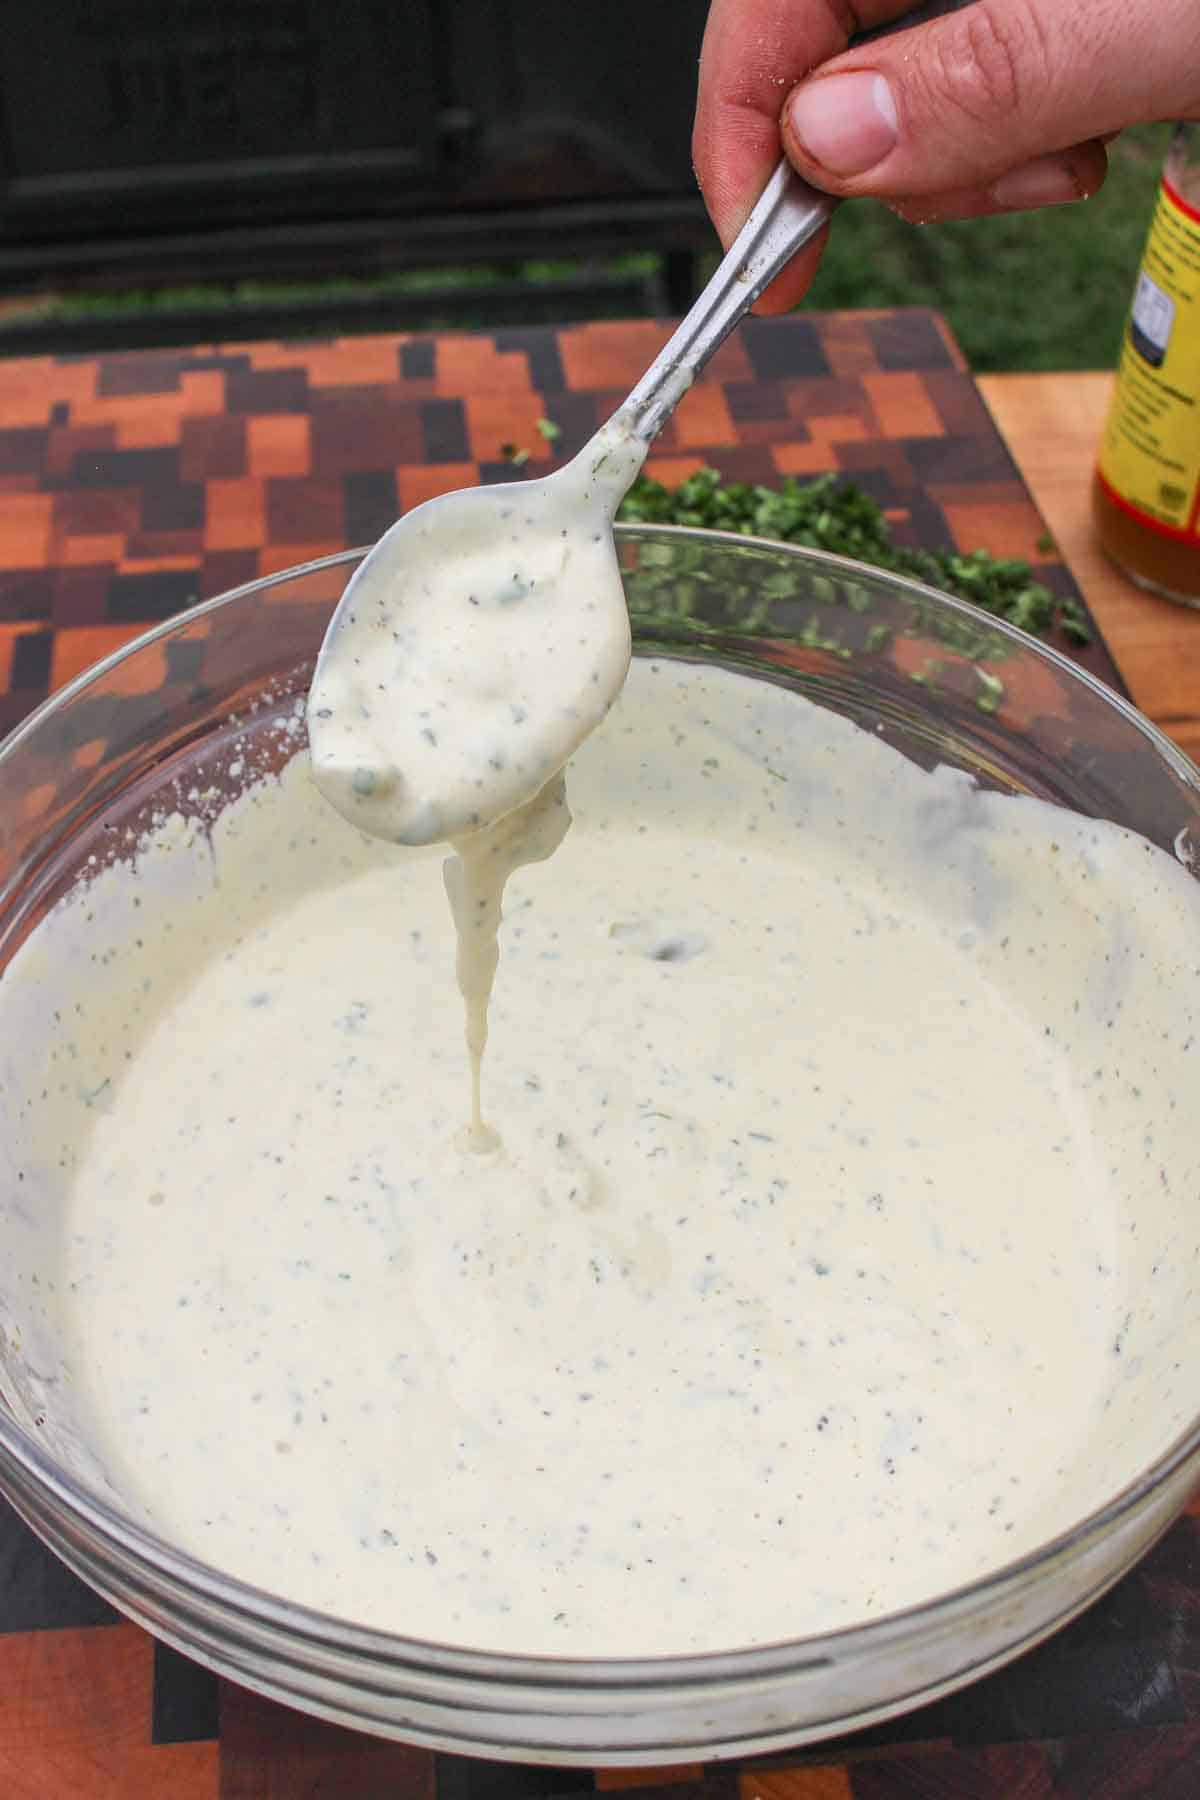 The mixed jalapeño lime white sauce.